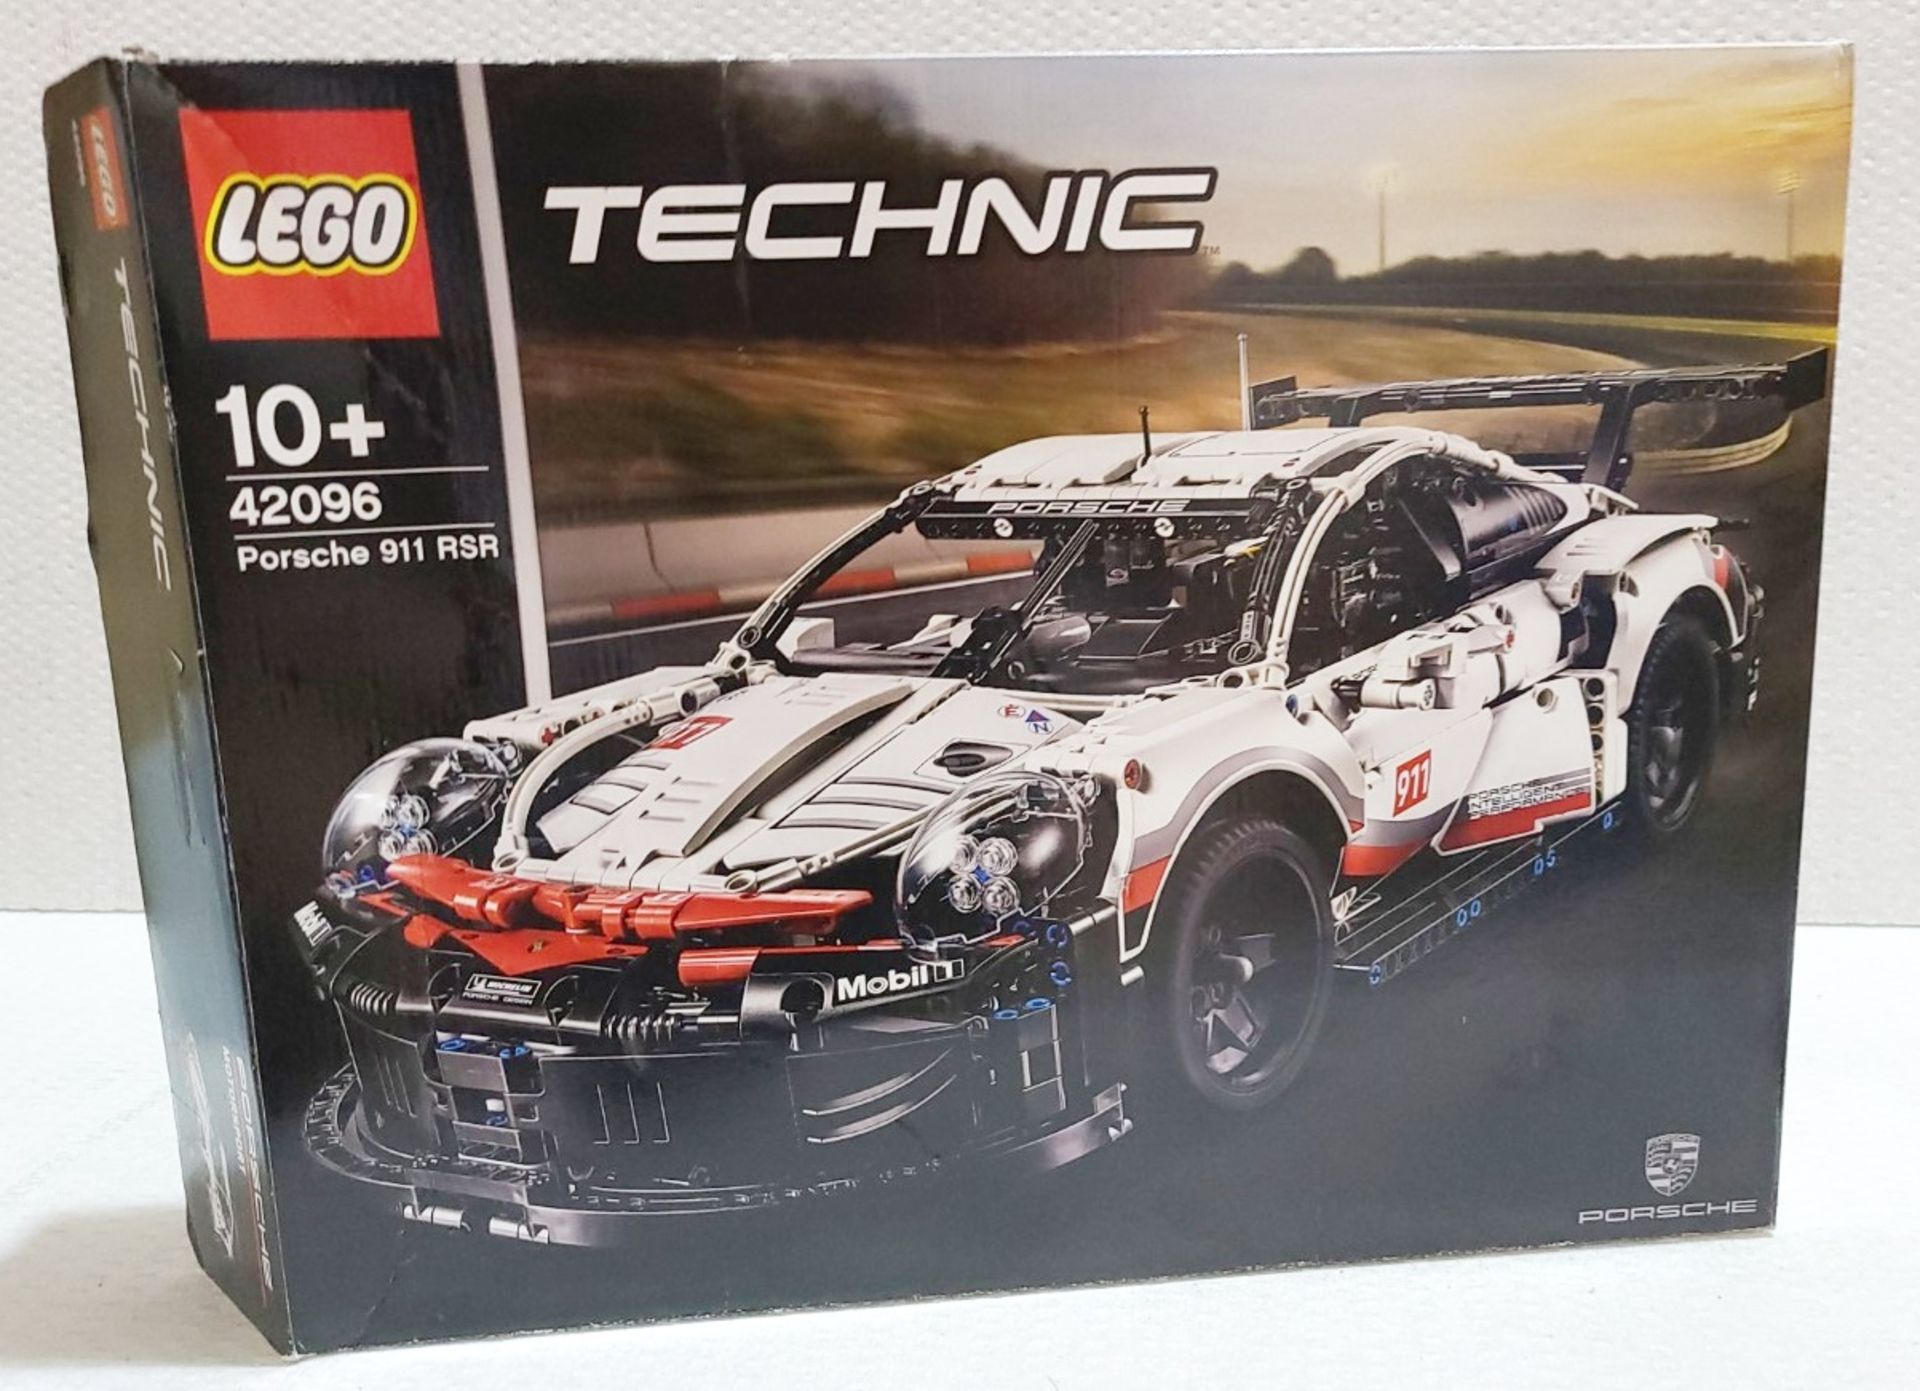 1 x LEGO Technic Porsche 911 RSR Sports Car Set - Original Price £169.99 - Image 6 of 6